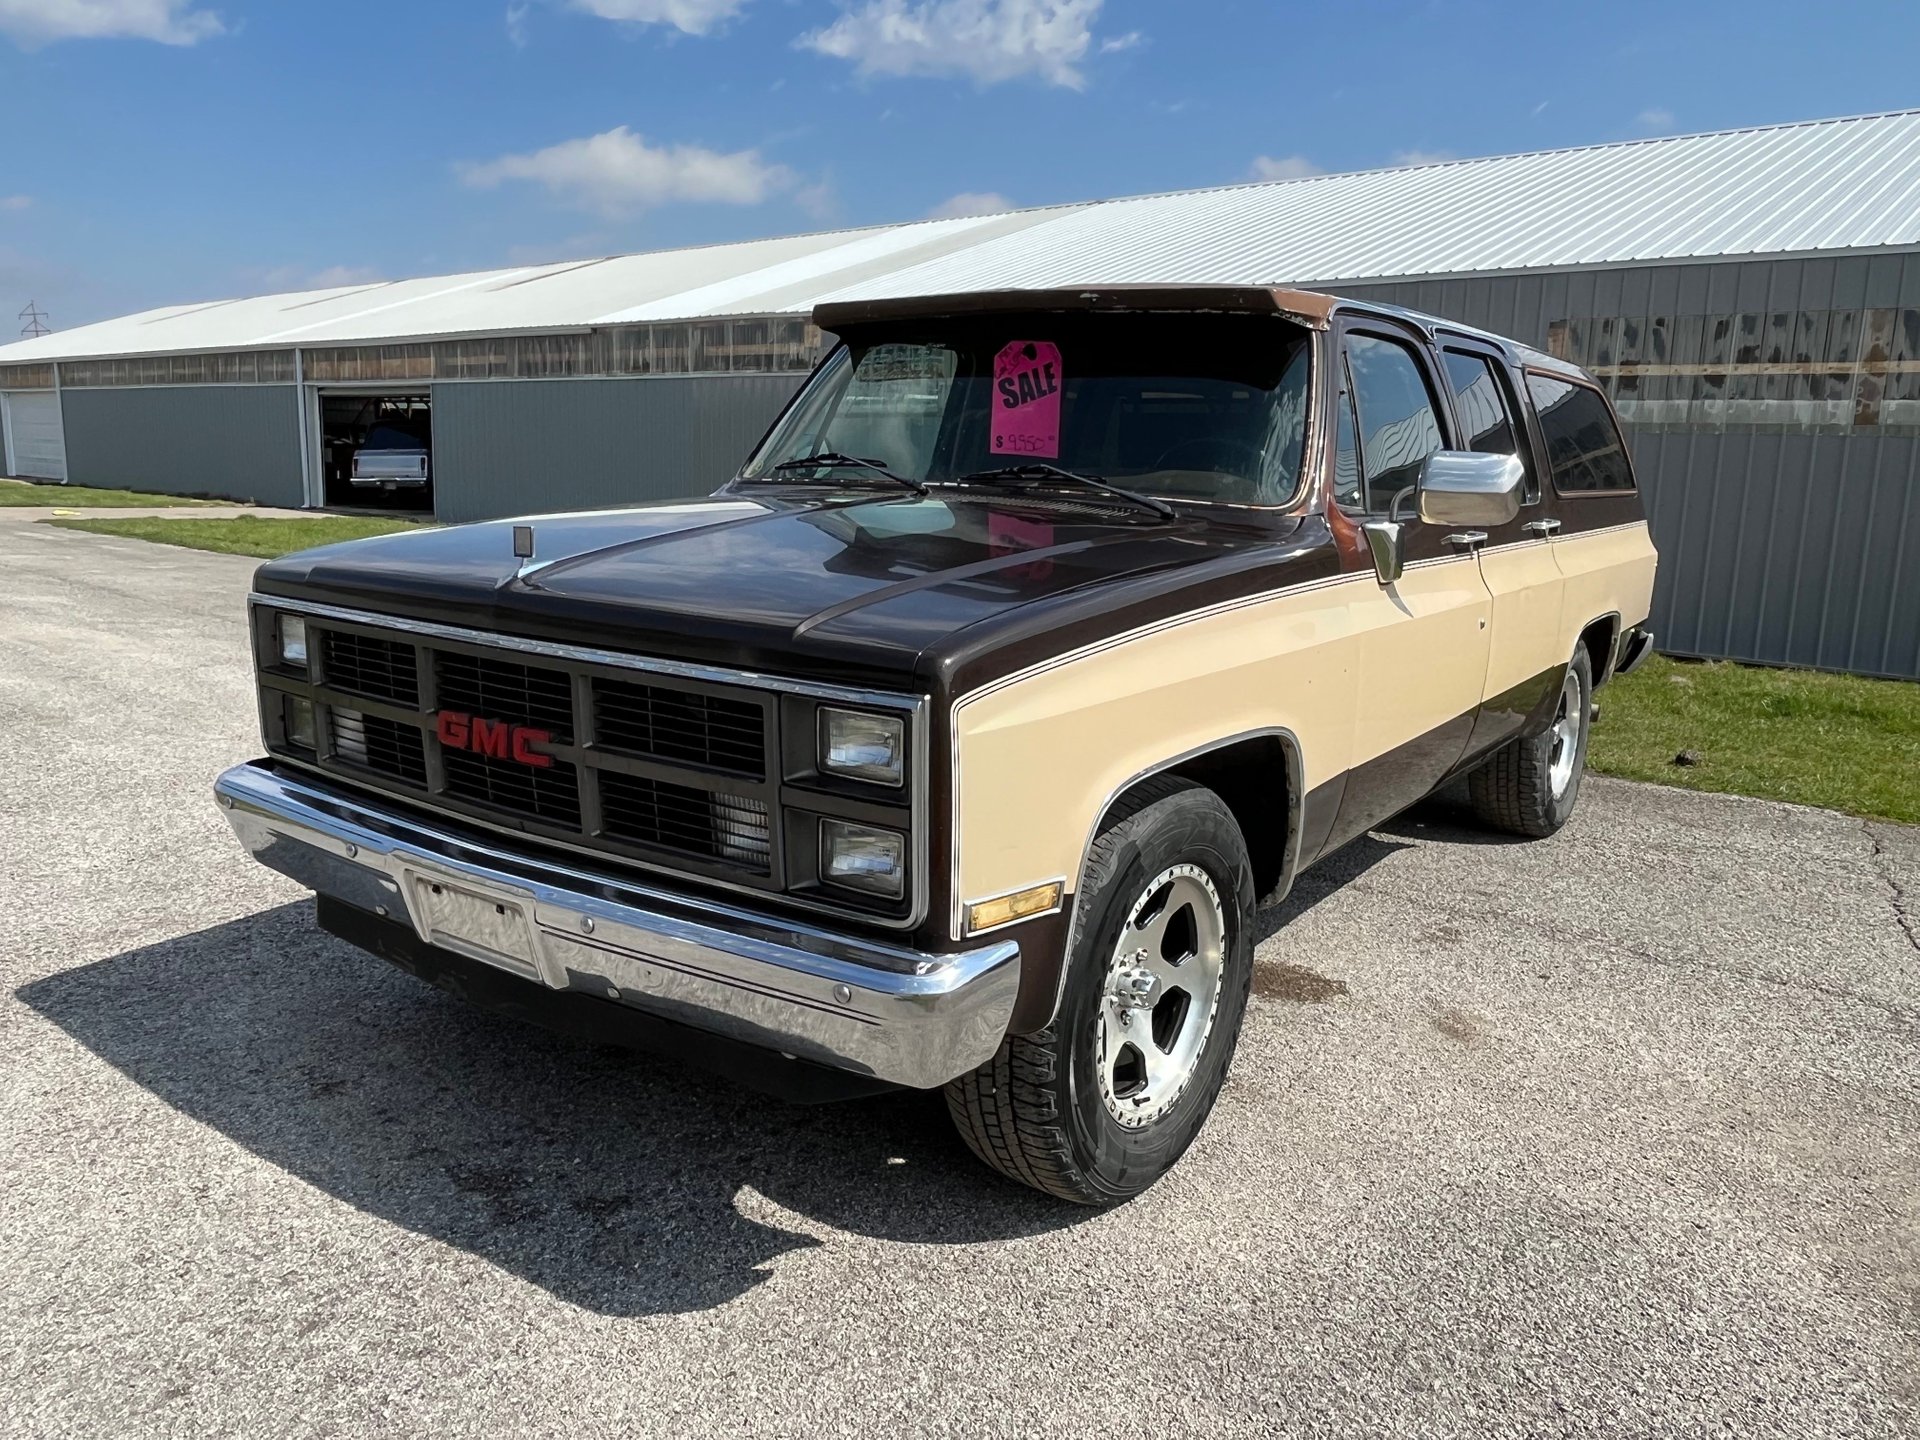 1984 GMC Suburban | Country Classic Cars